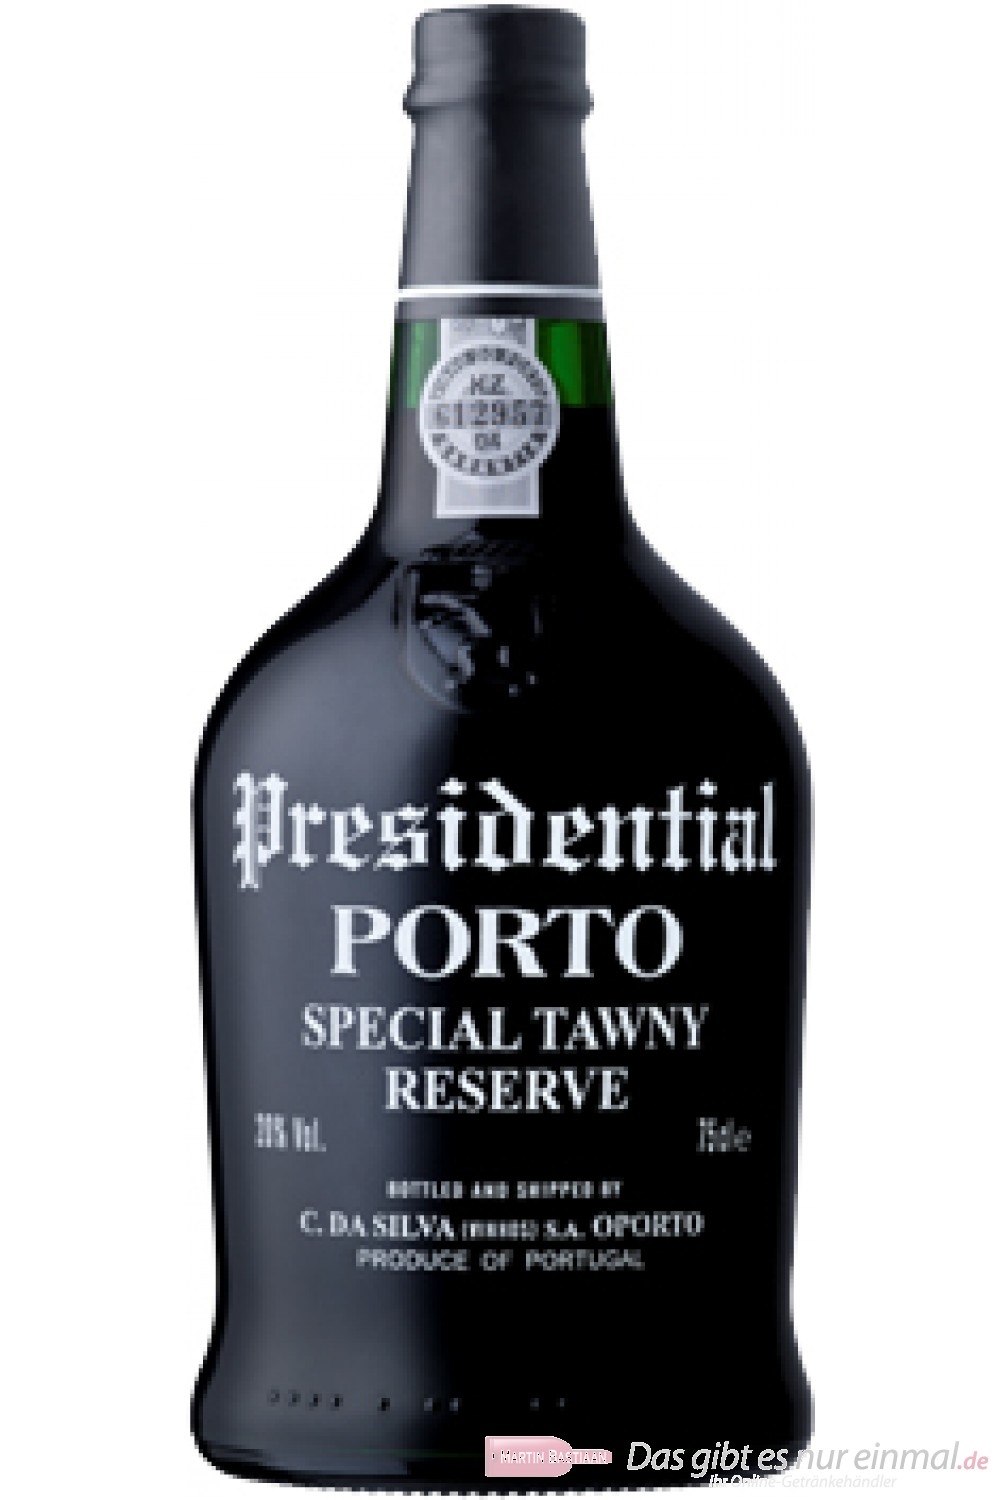 Presidential Porto Special Tawny Reserve